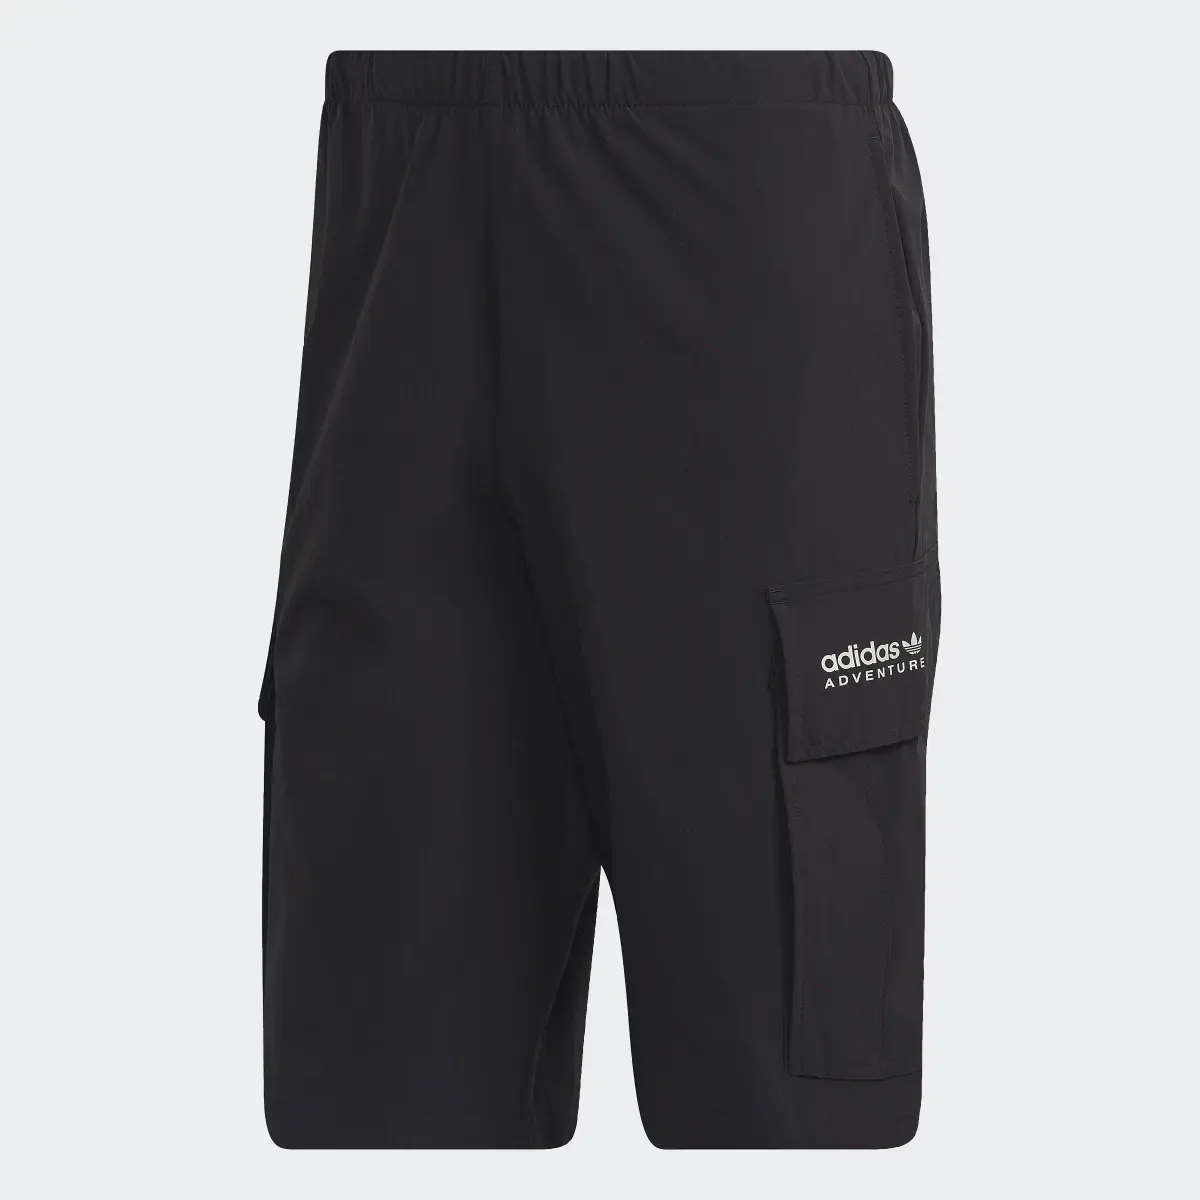 Adidas Adventure Cargo Shorts. 3